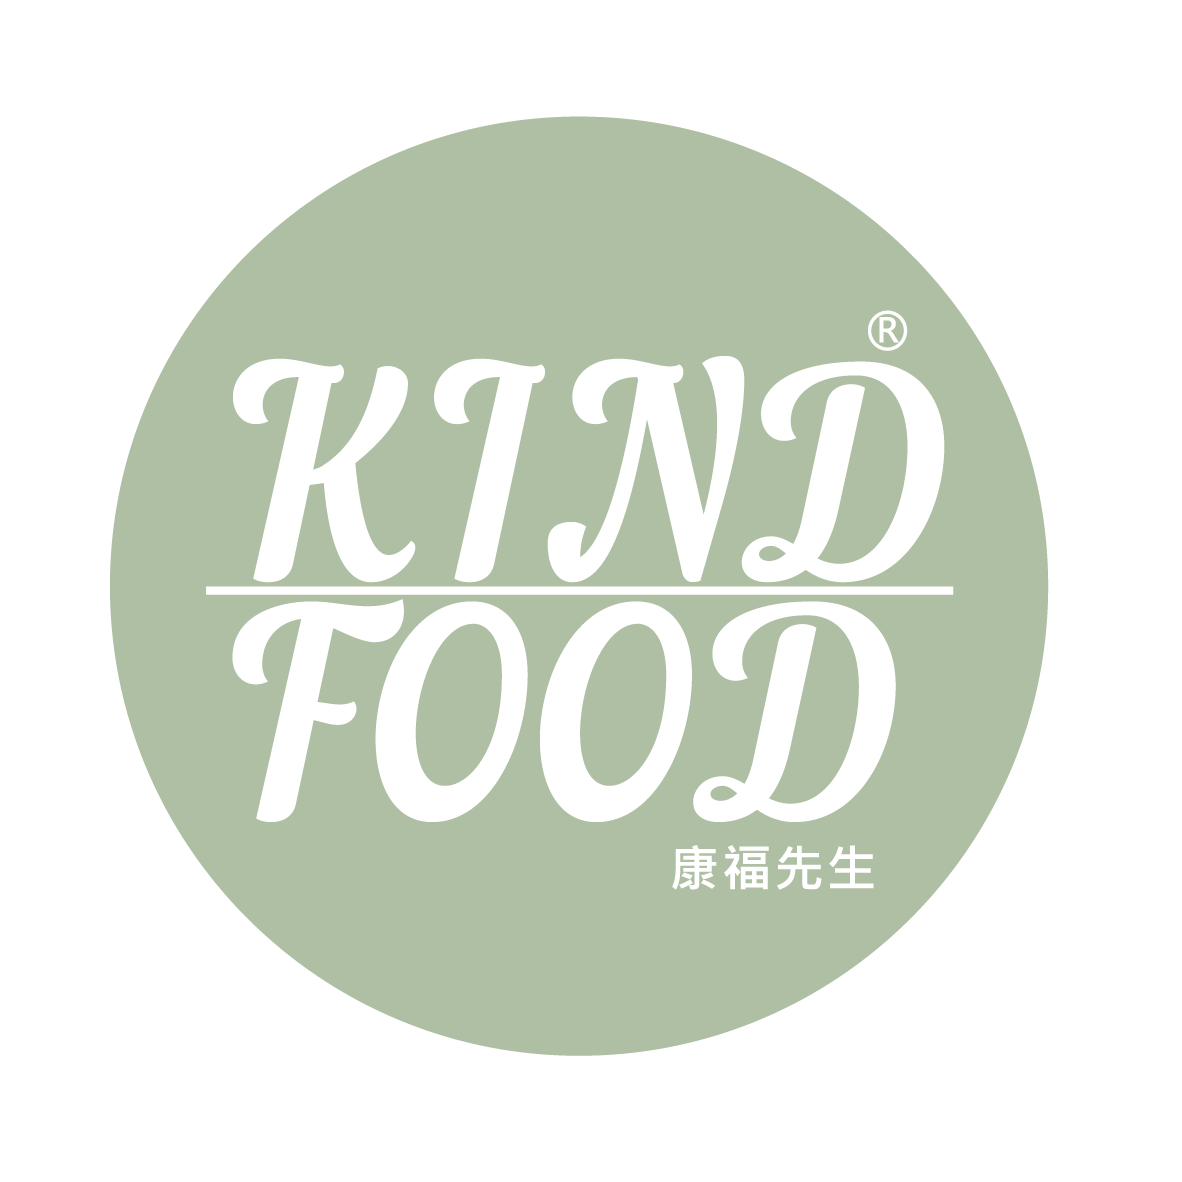 KIND FOOD 康福先生